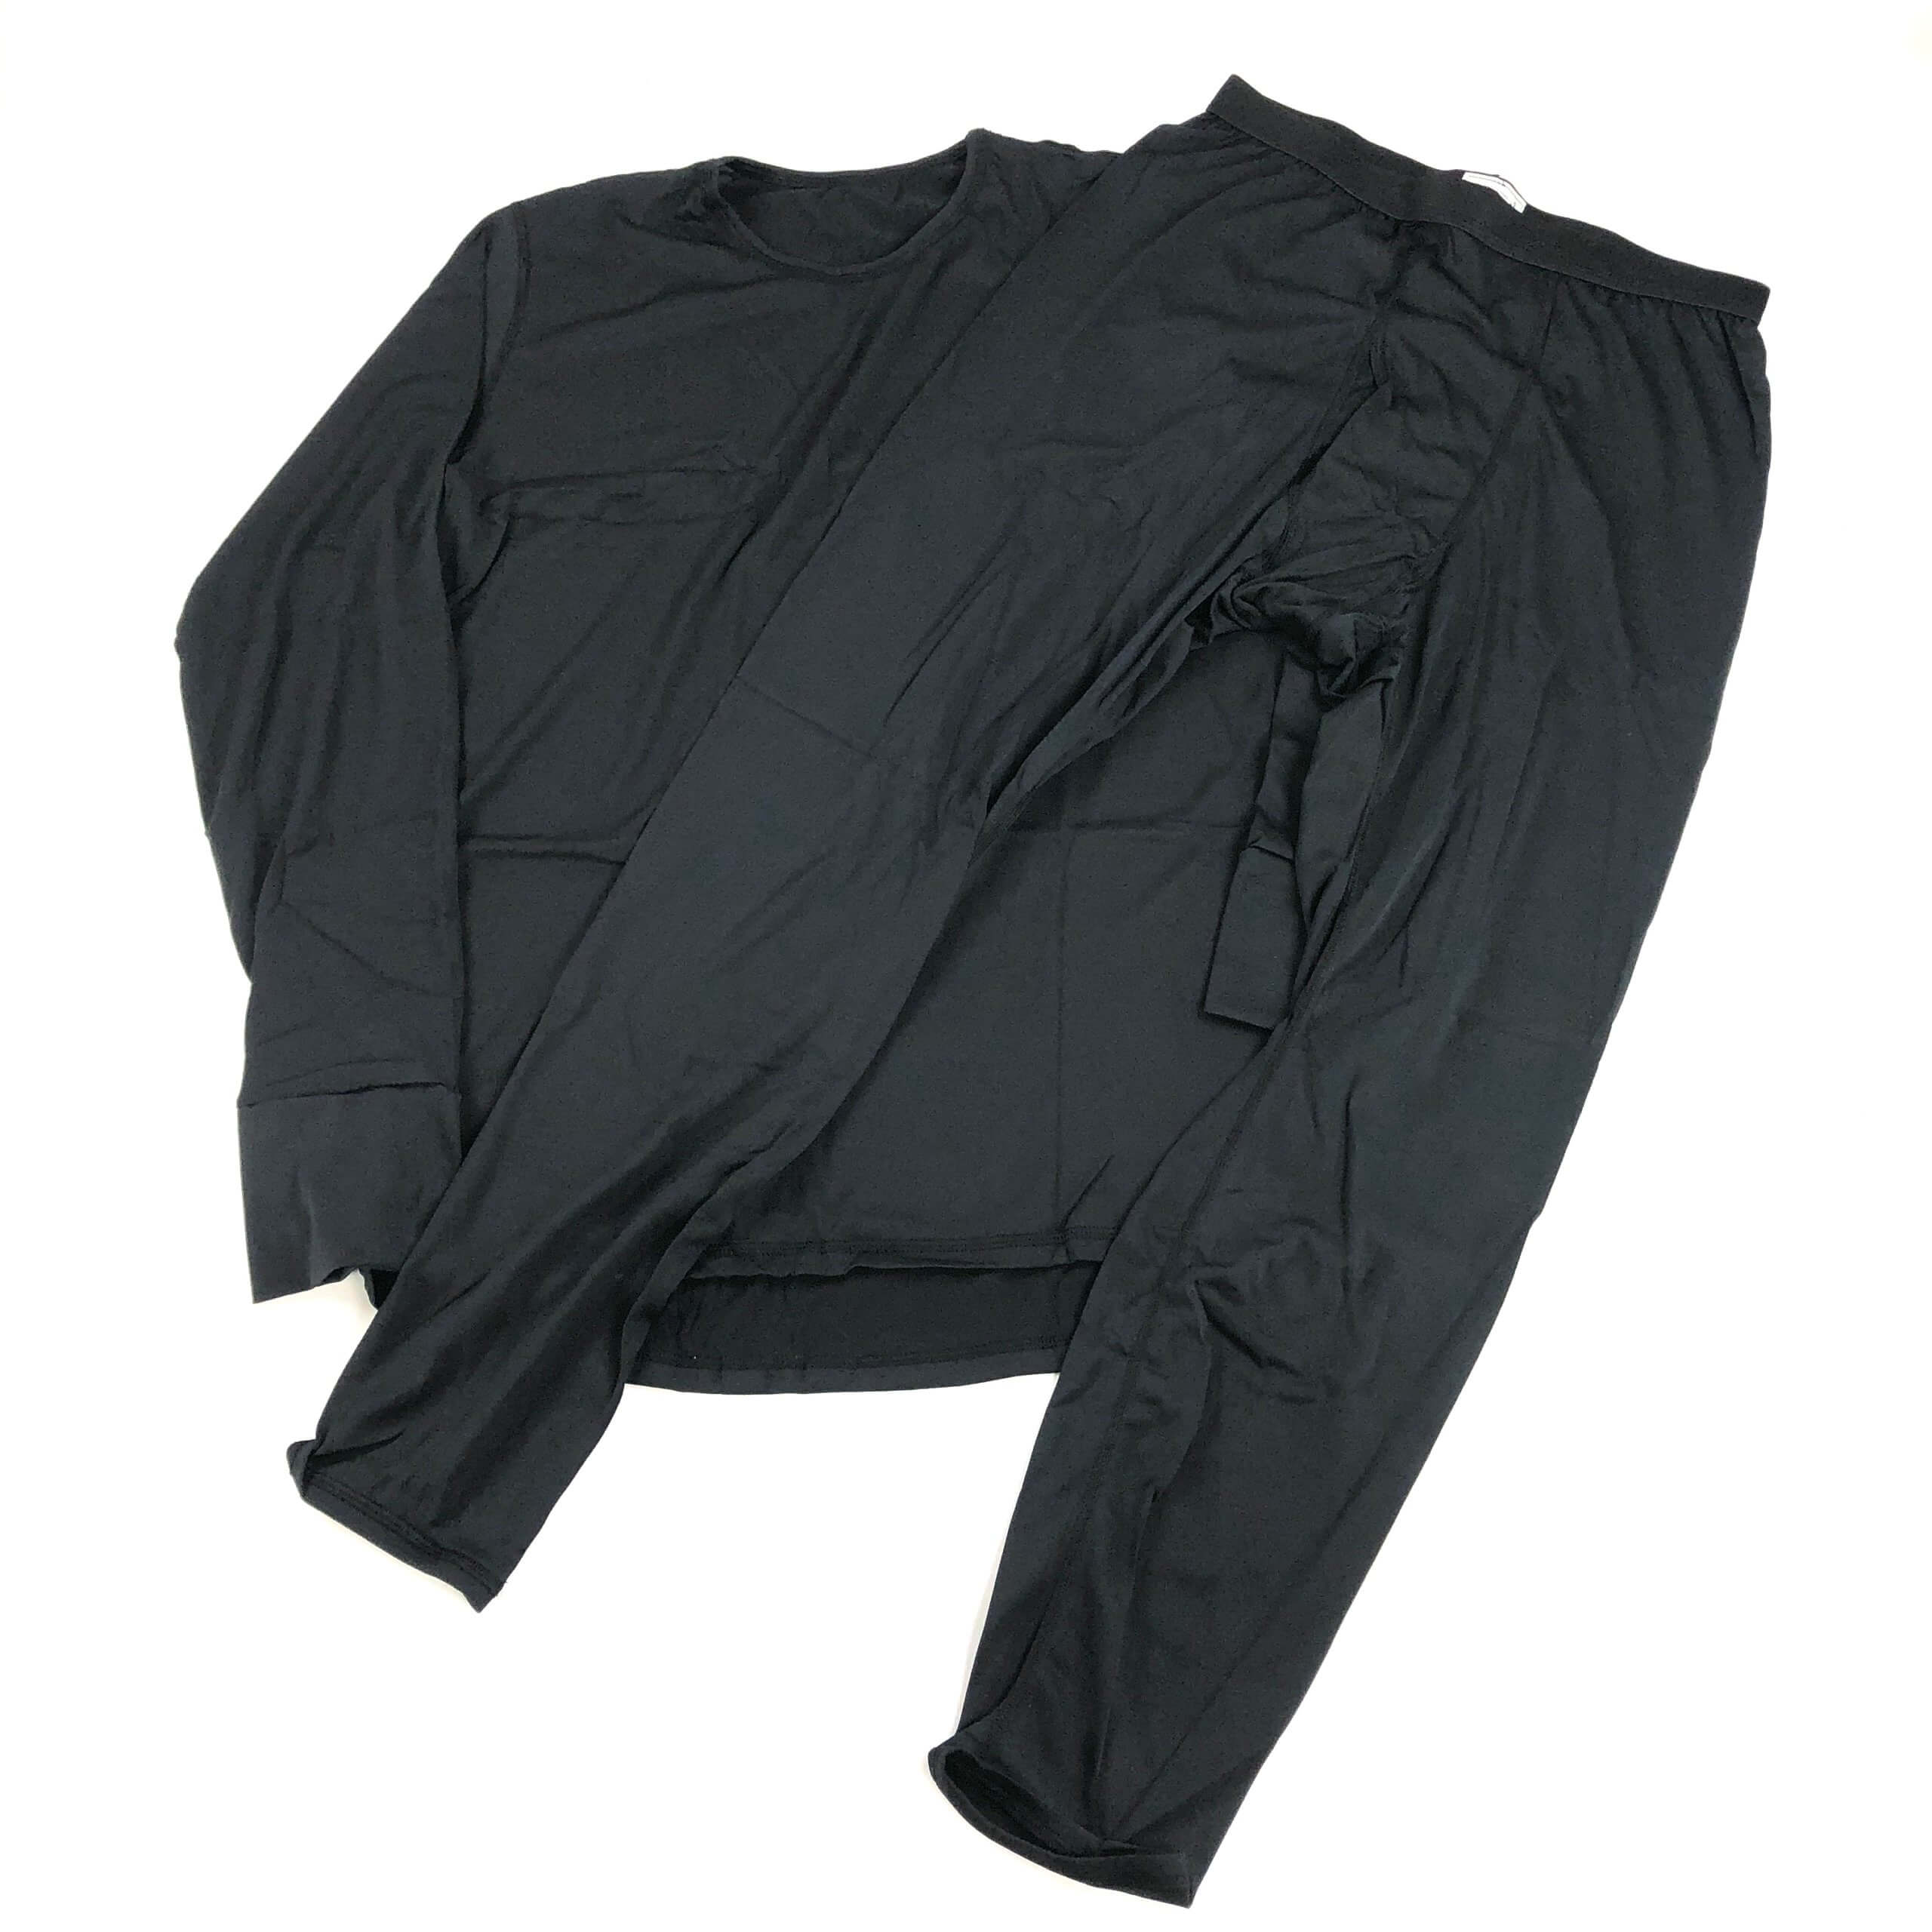 New USGI ECWCS XL Reg Cold Weather Lightweight Underwear Set Pants/Shirt Black